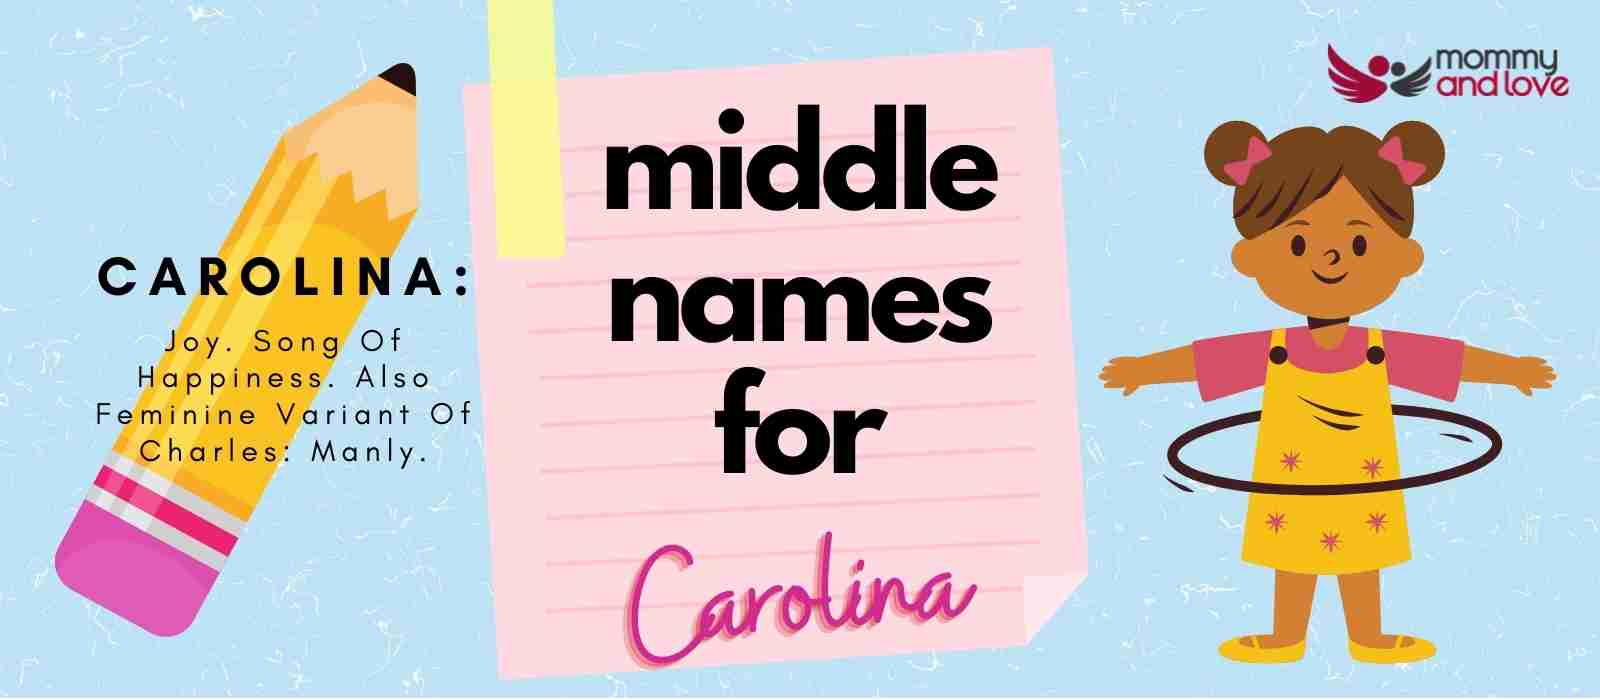 Middle Names for Carolina